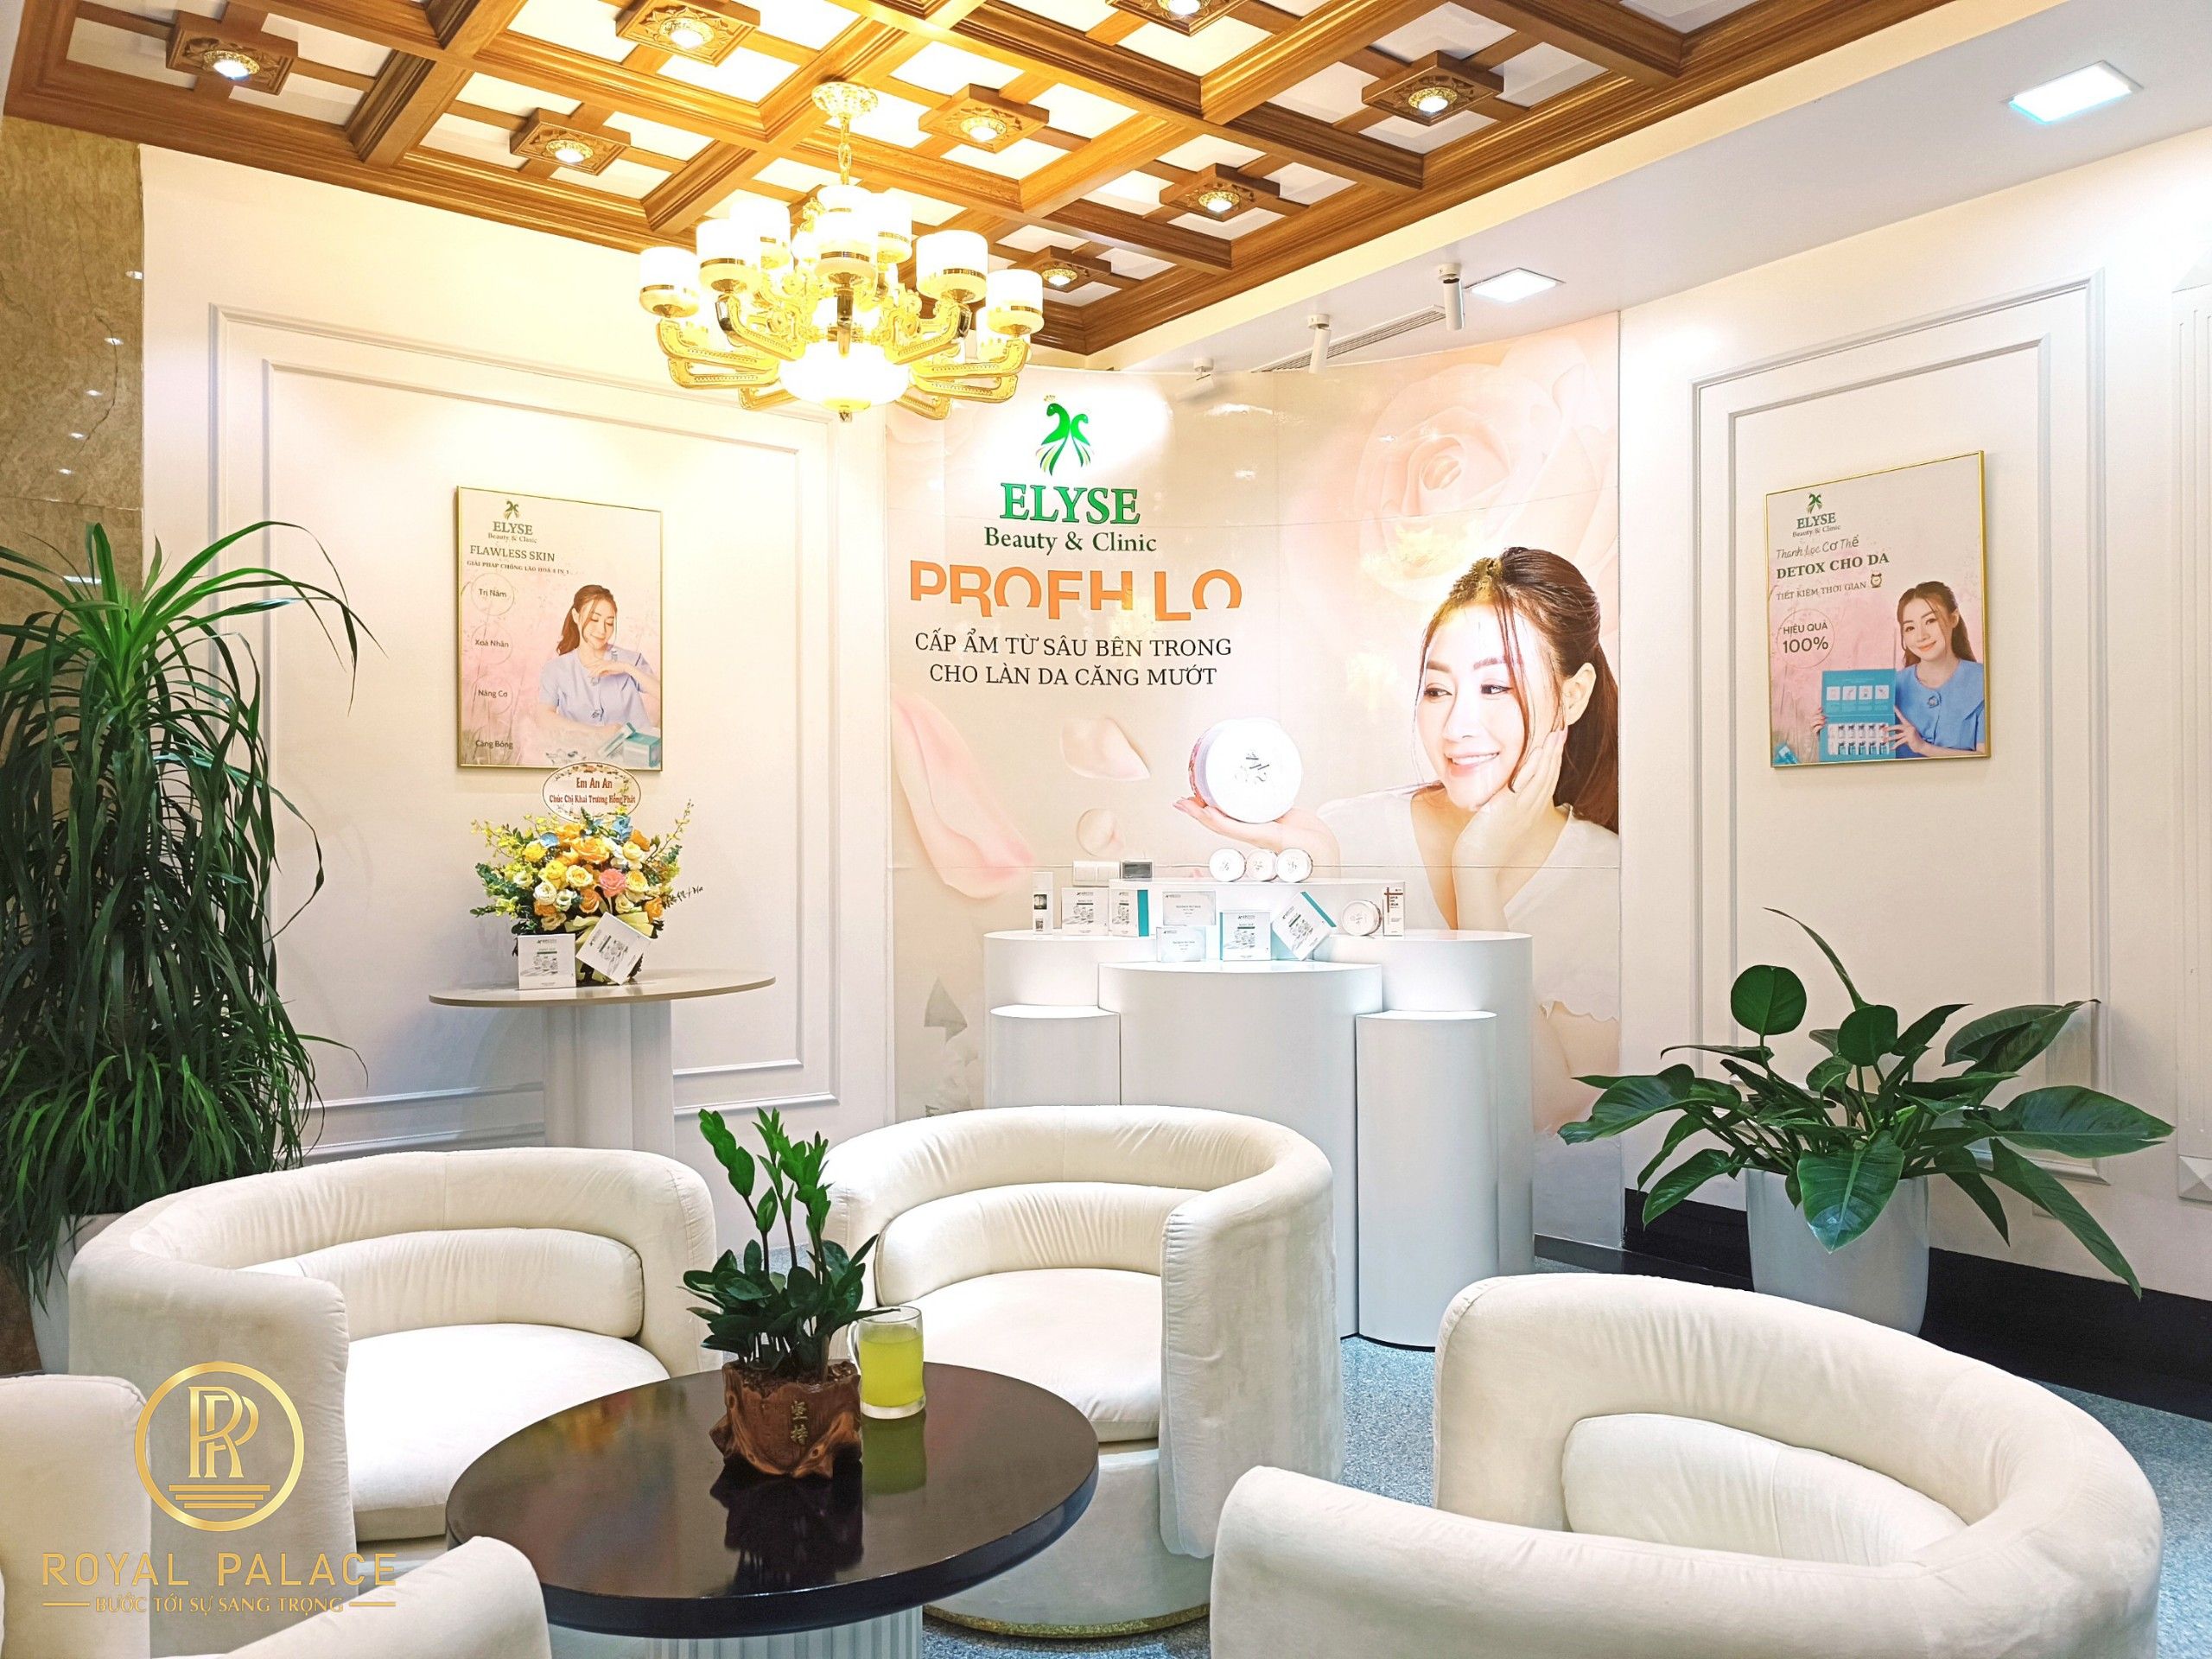 Thi công setup spa - Elyse Beauty Clinic